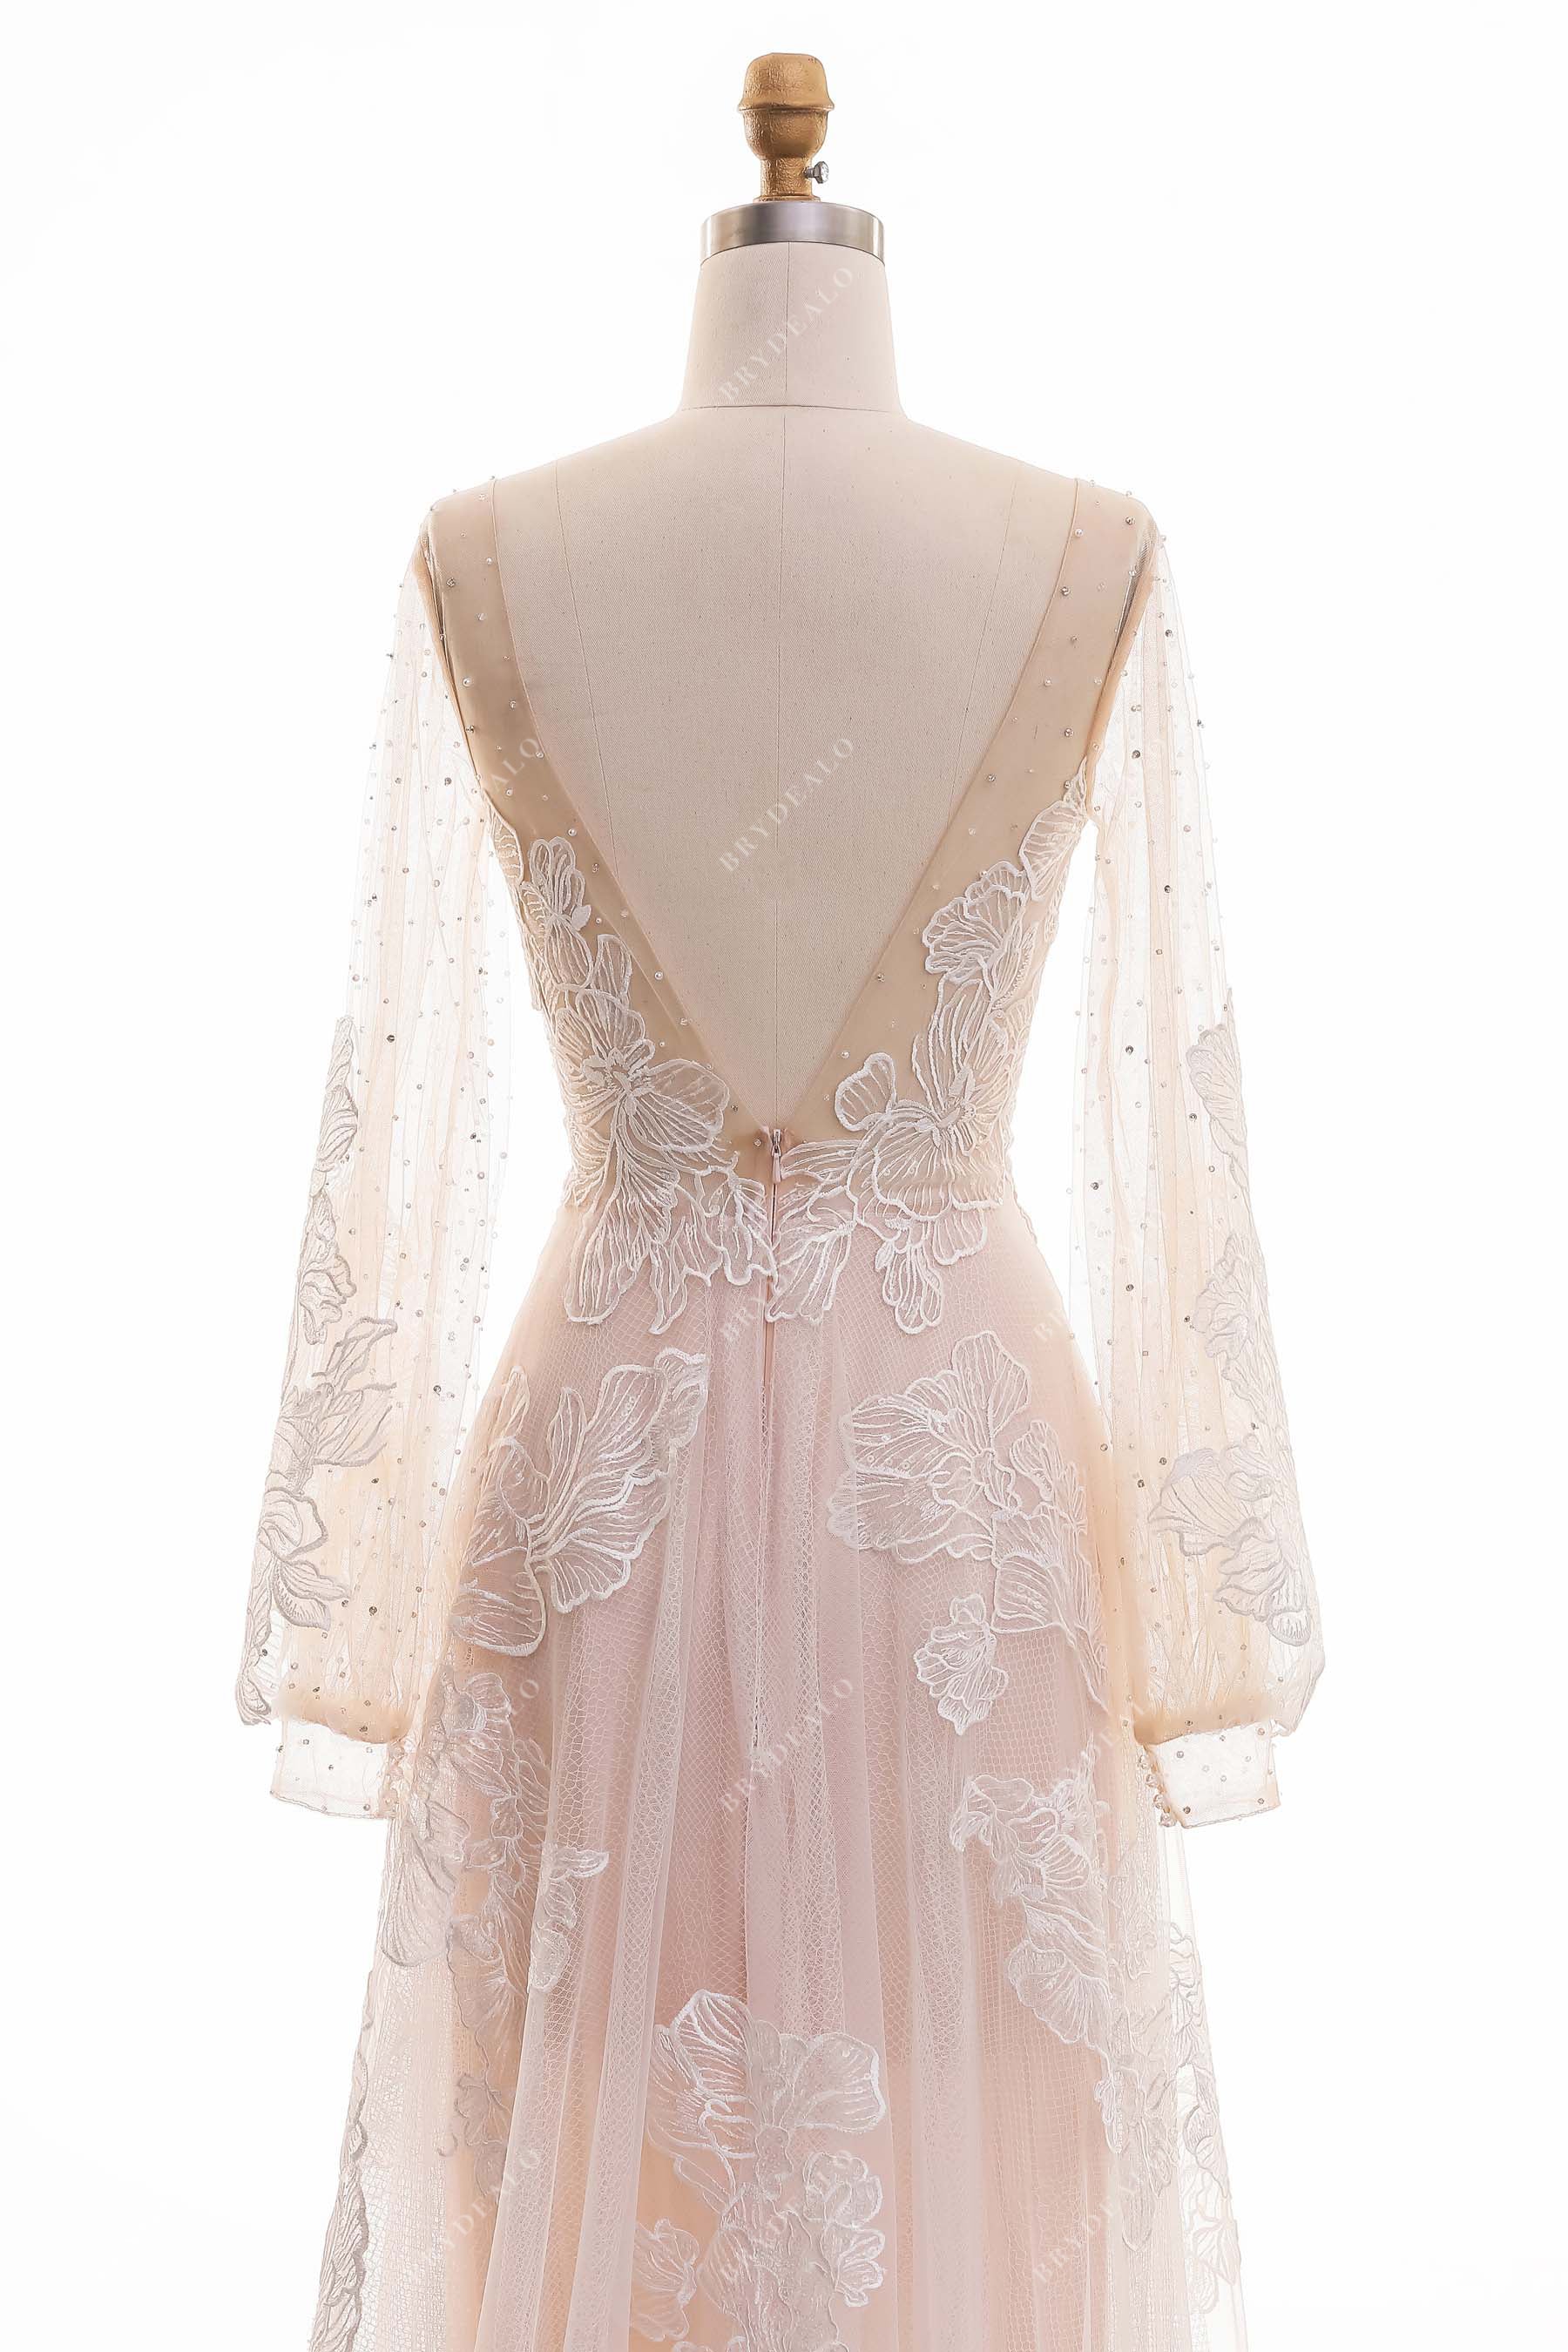 Open V-back sheer sleeves beaded lace bridal dress